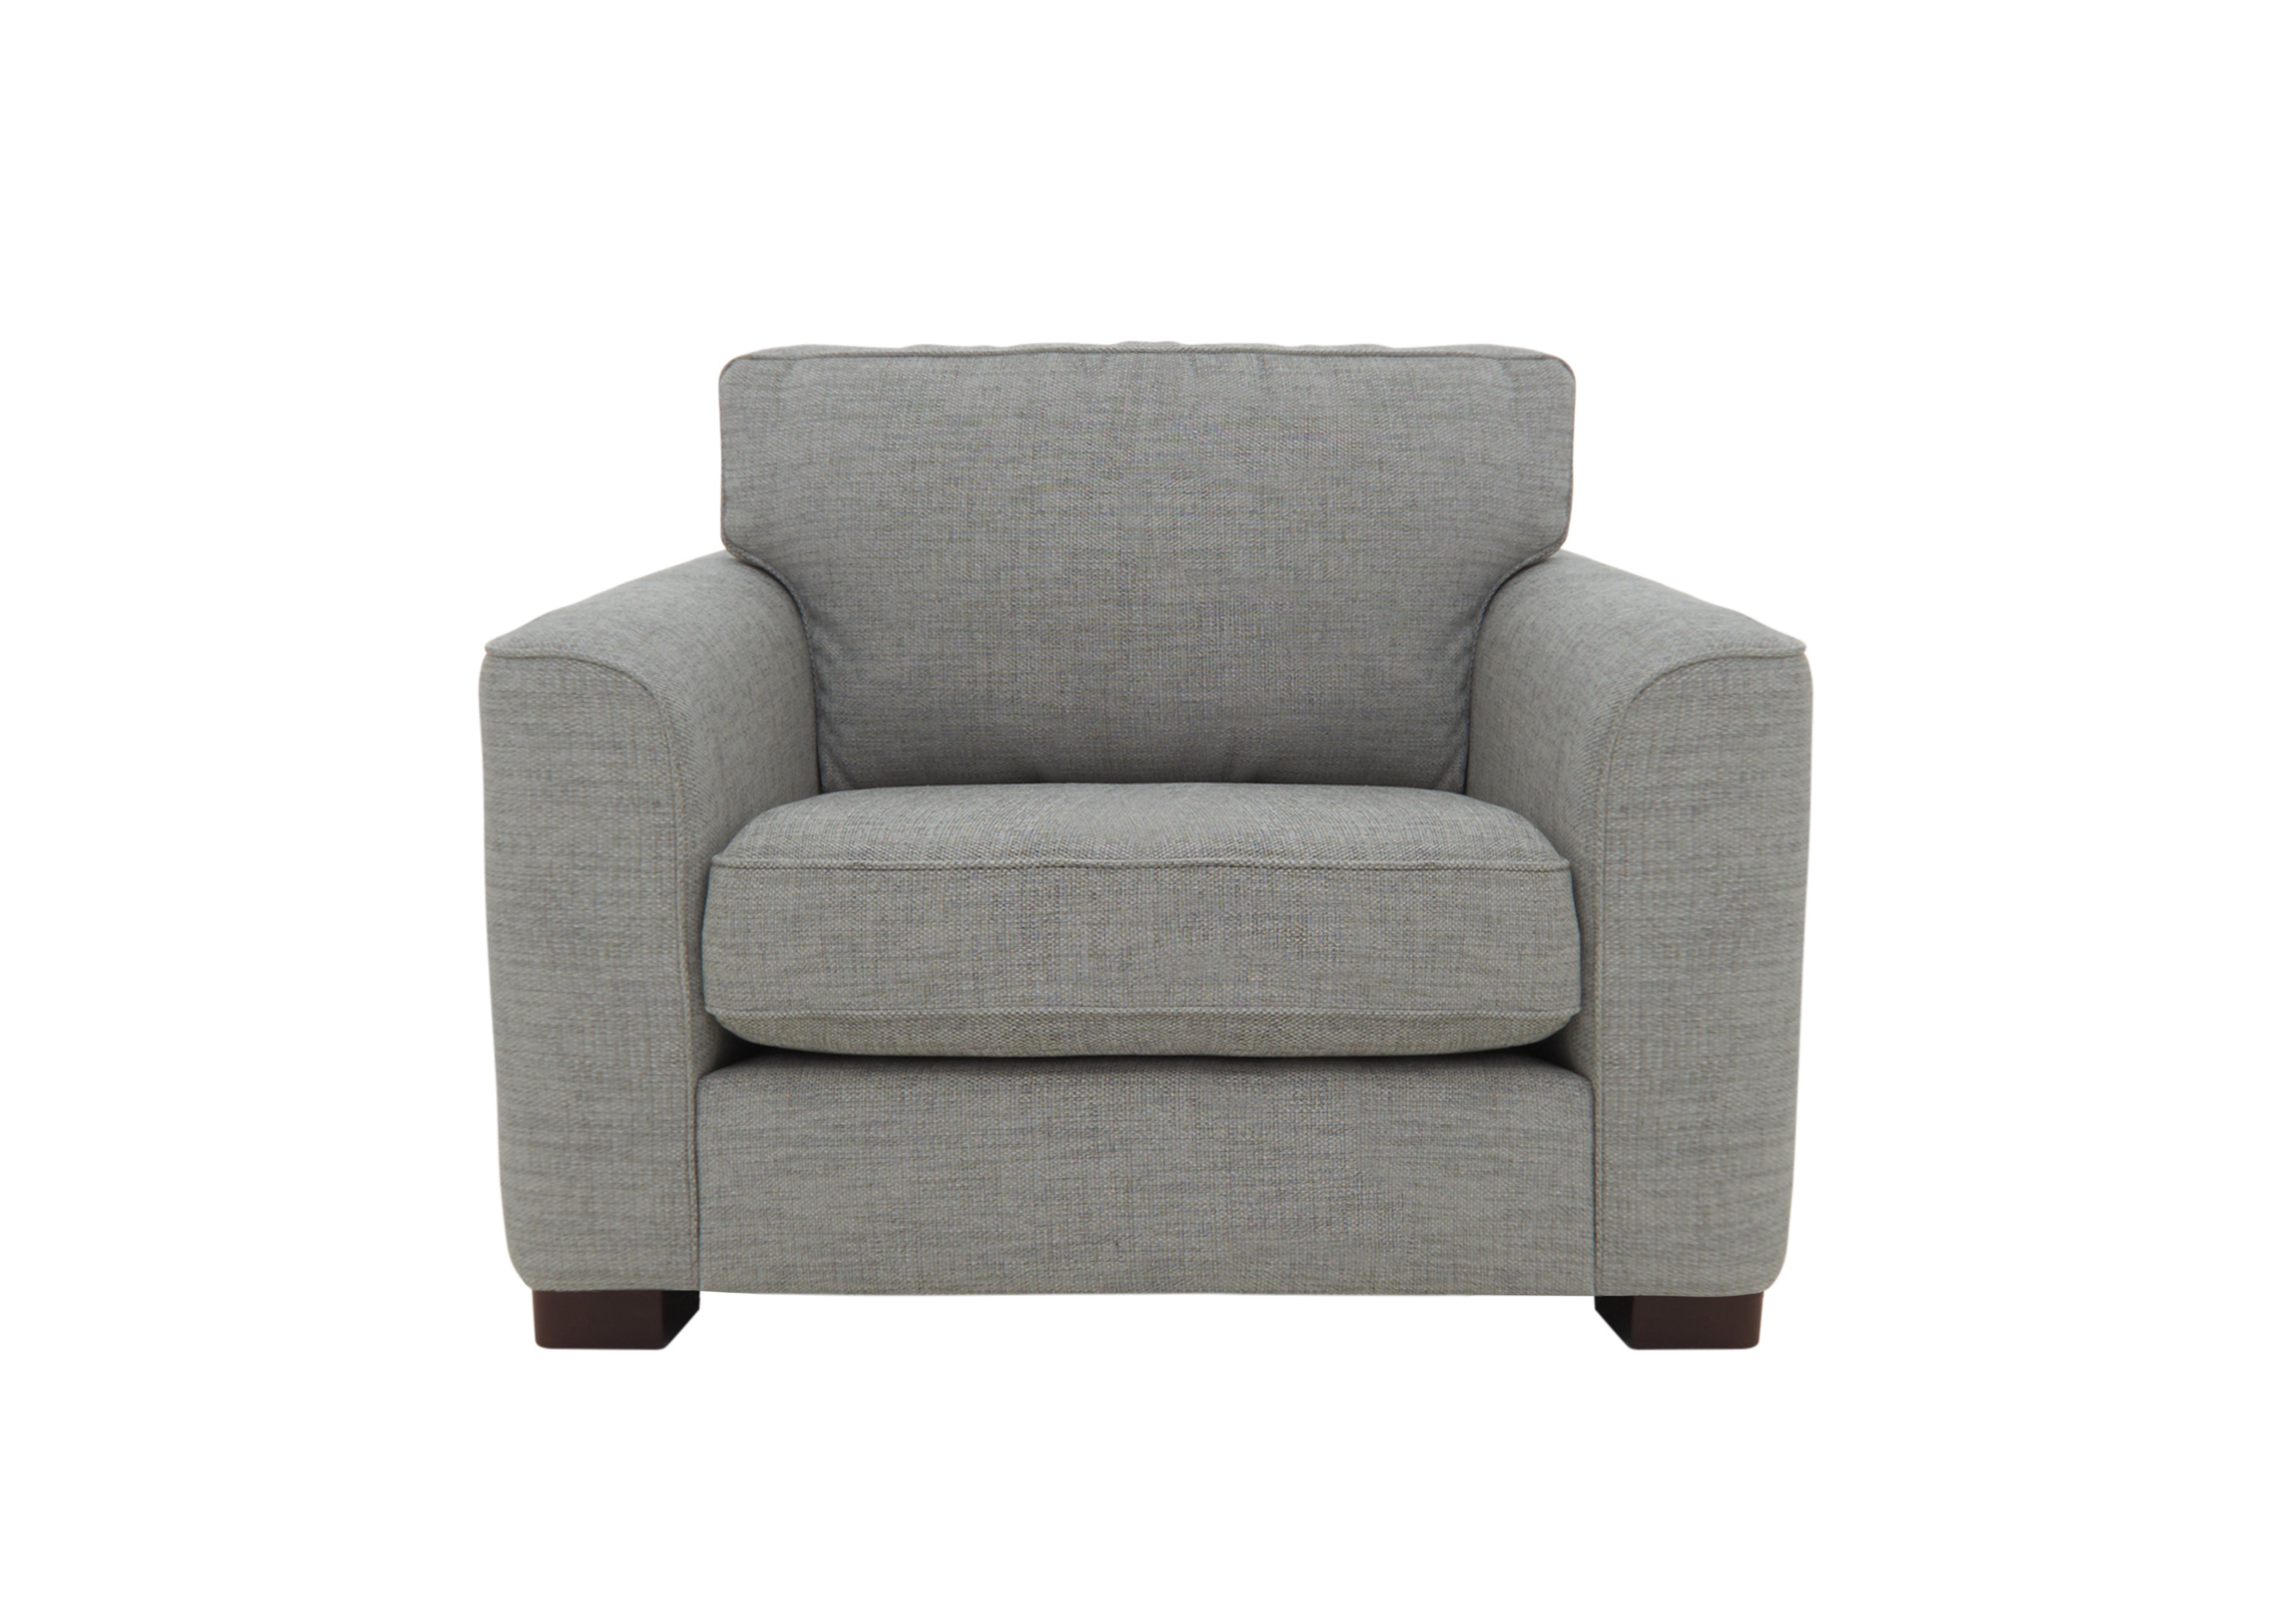 Elora Large Fabric Armchair in Kento 301 Warm Grey Dbf on Furniture Village